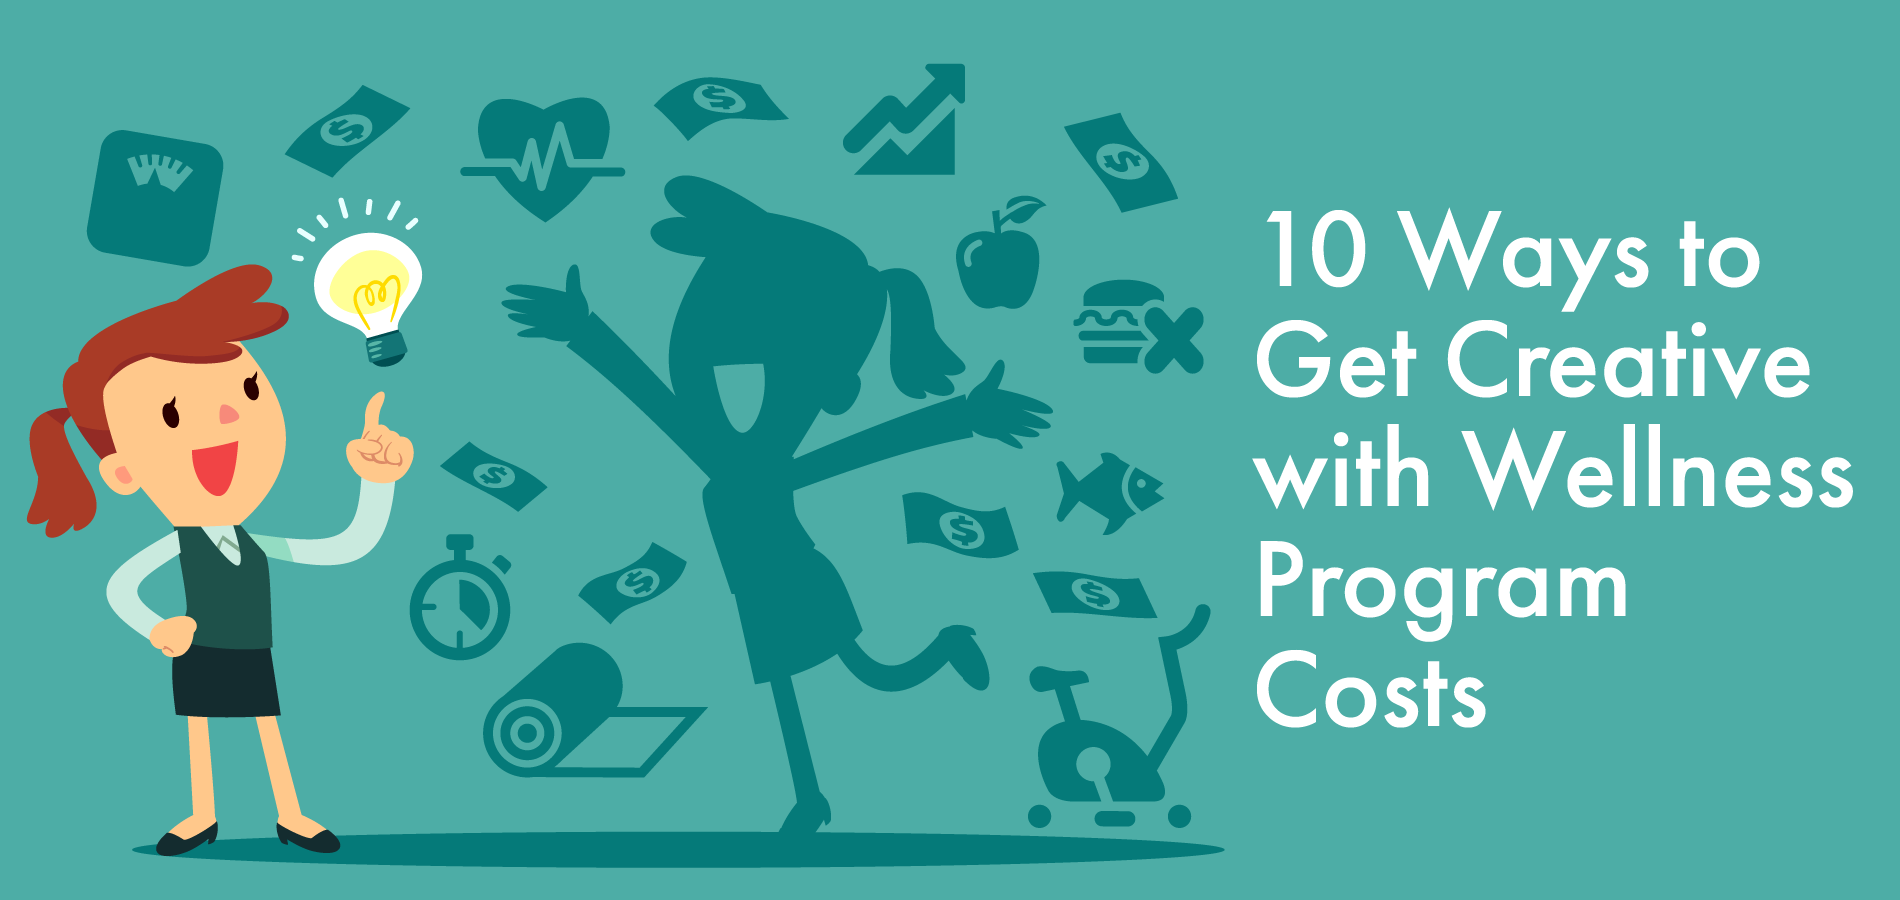 10 Ways to Get Creative with Wellness Program Costs